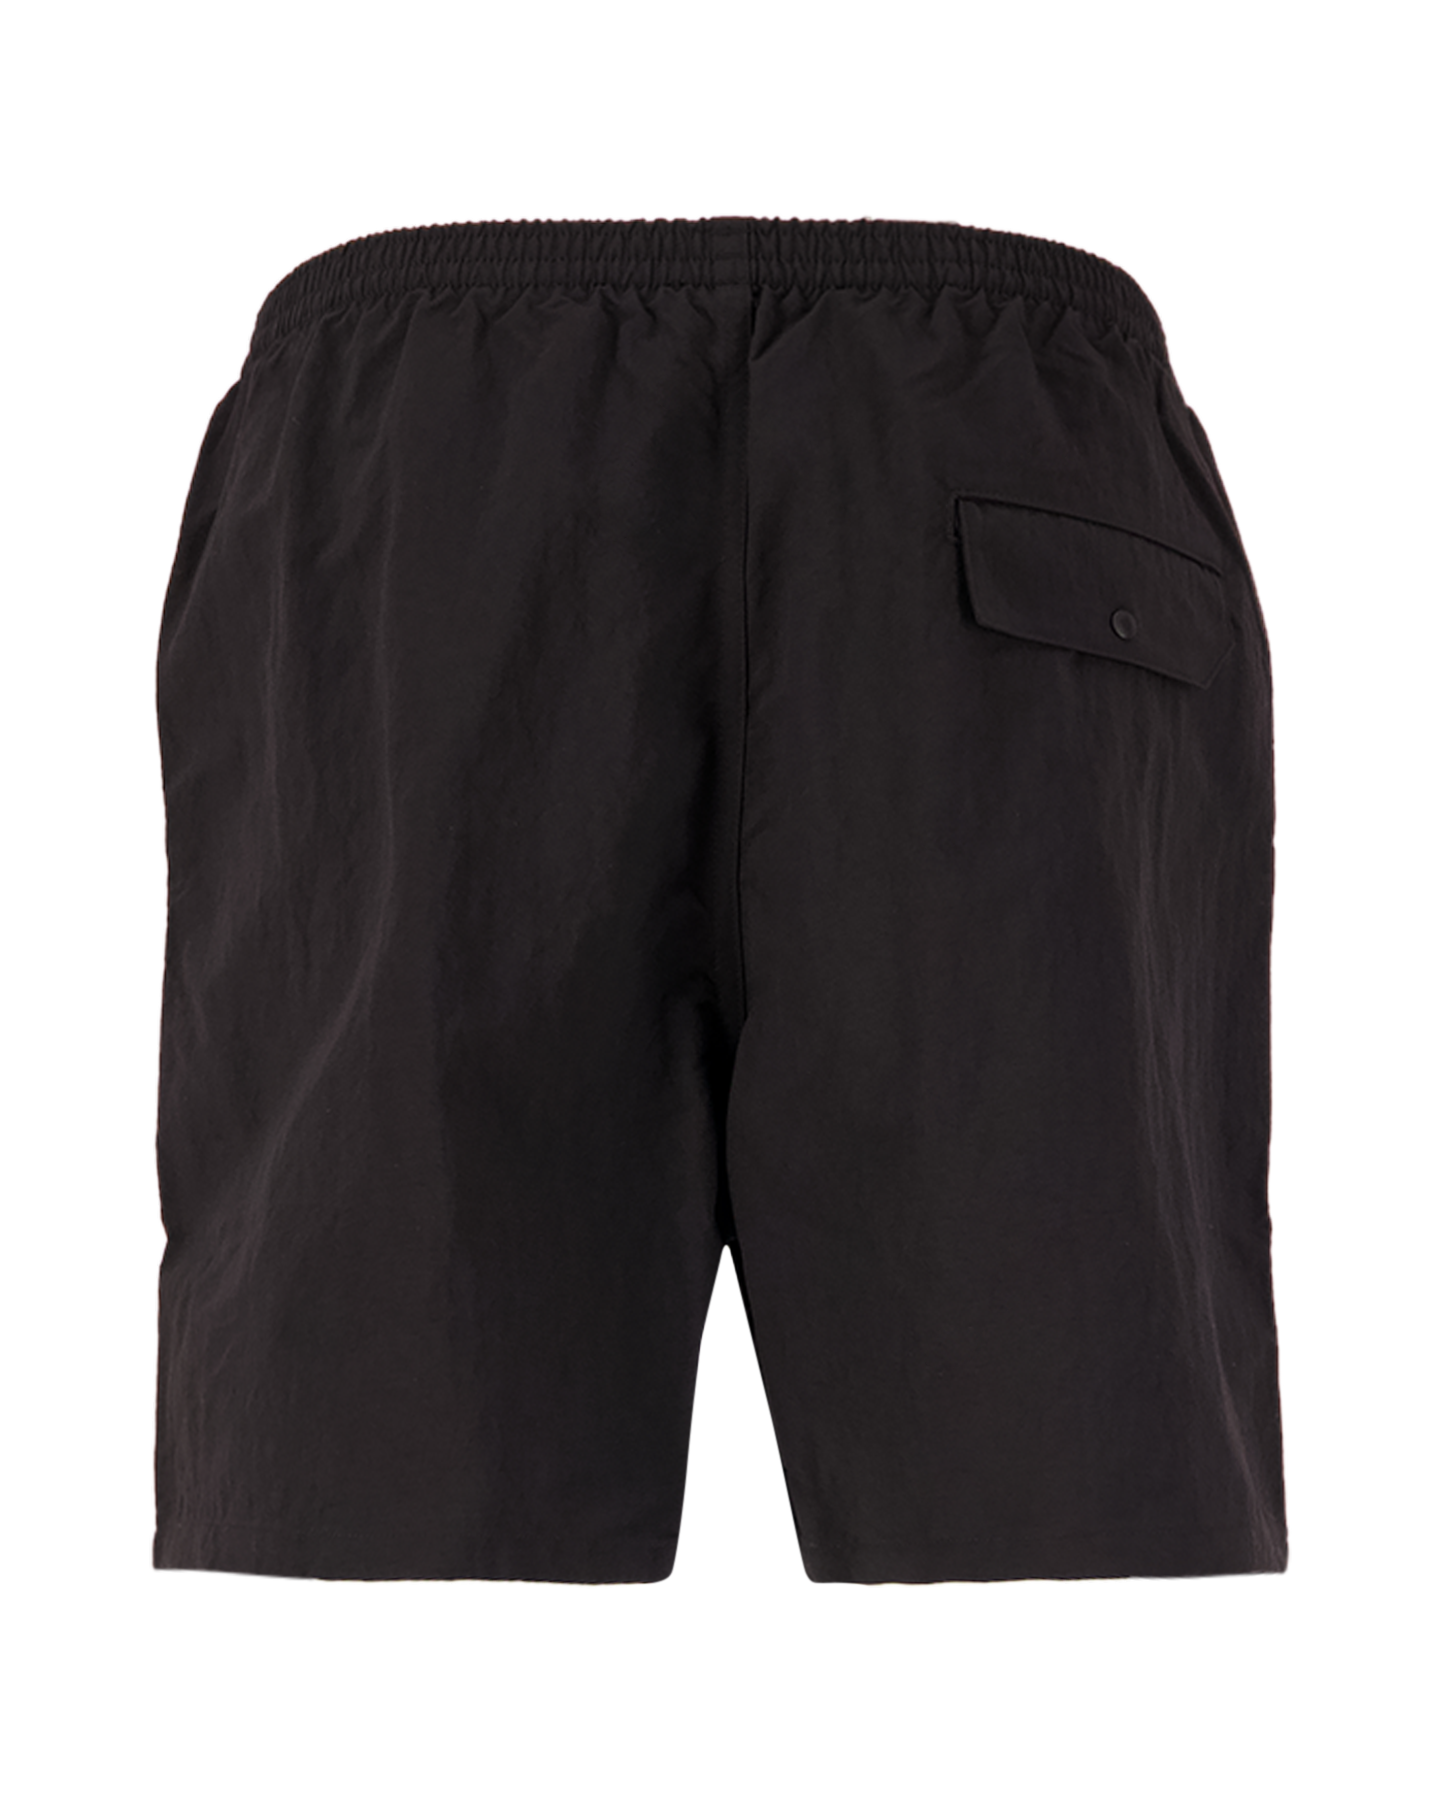 Patagonia M'S Baggies Shorts - 5 In. BLACK 2